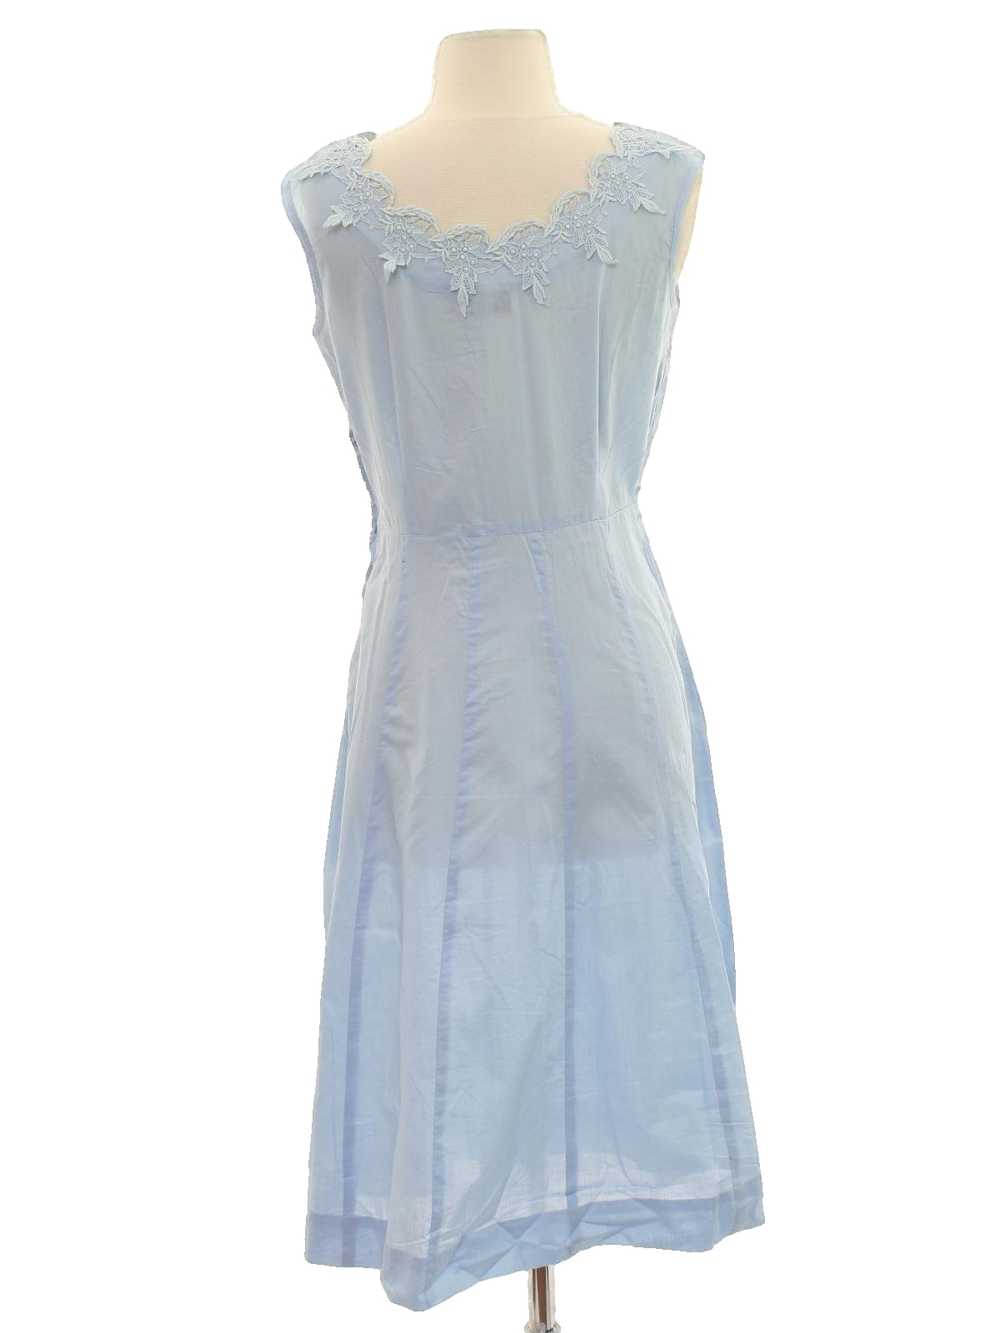 1950's Mynette Cocktail Dress - image 3